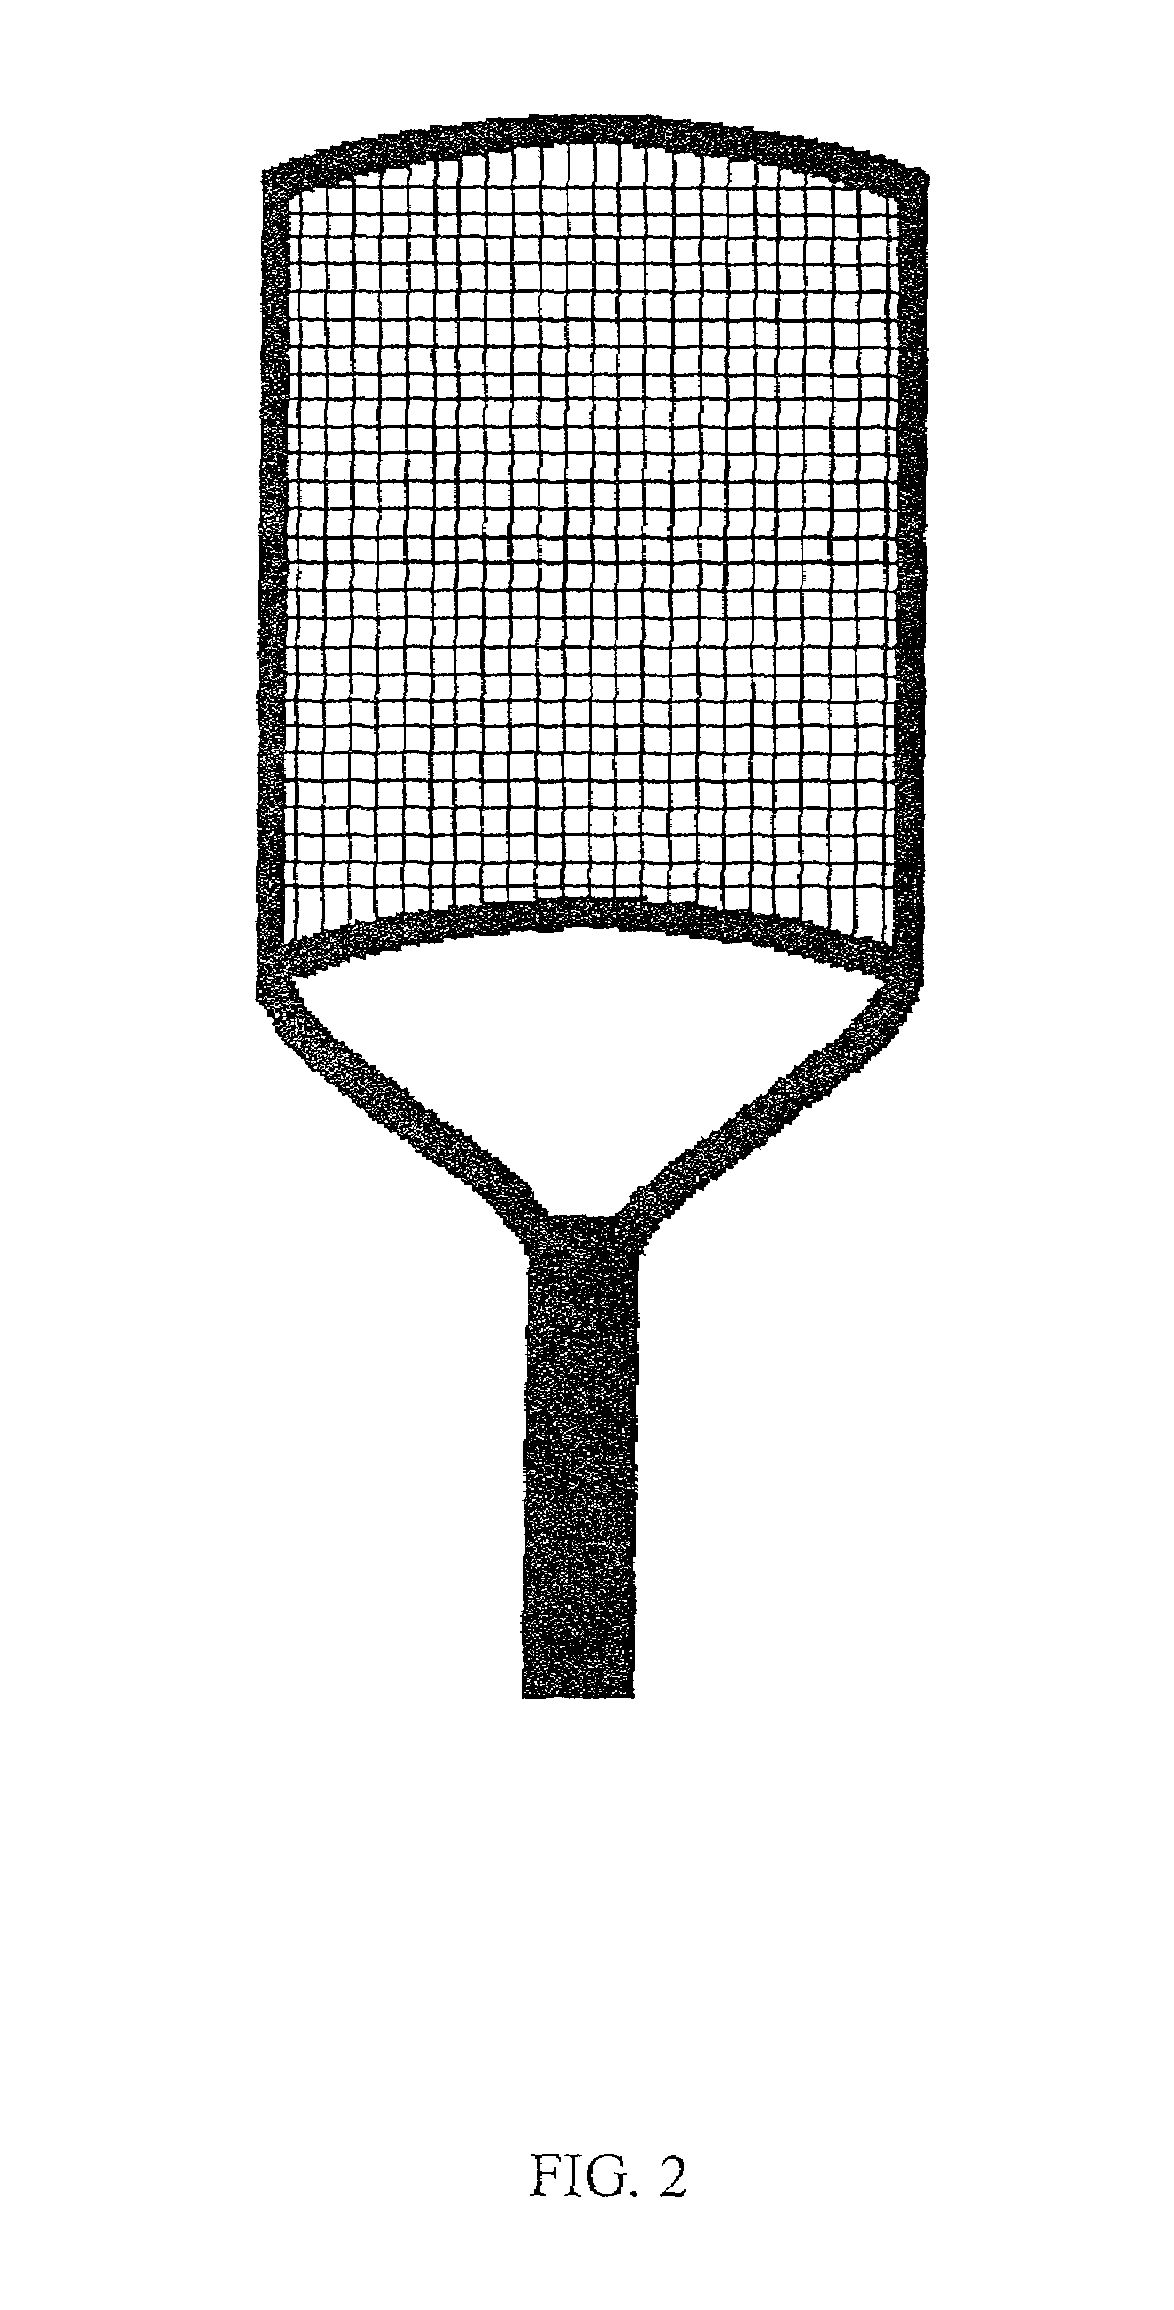 Sports racket having a uniform string structure